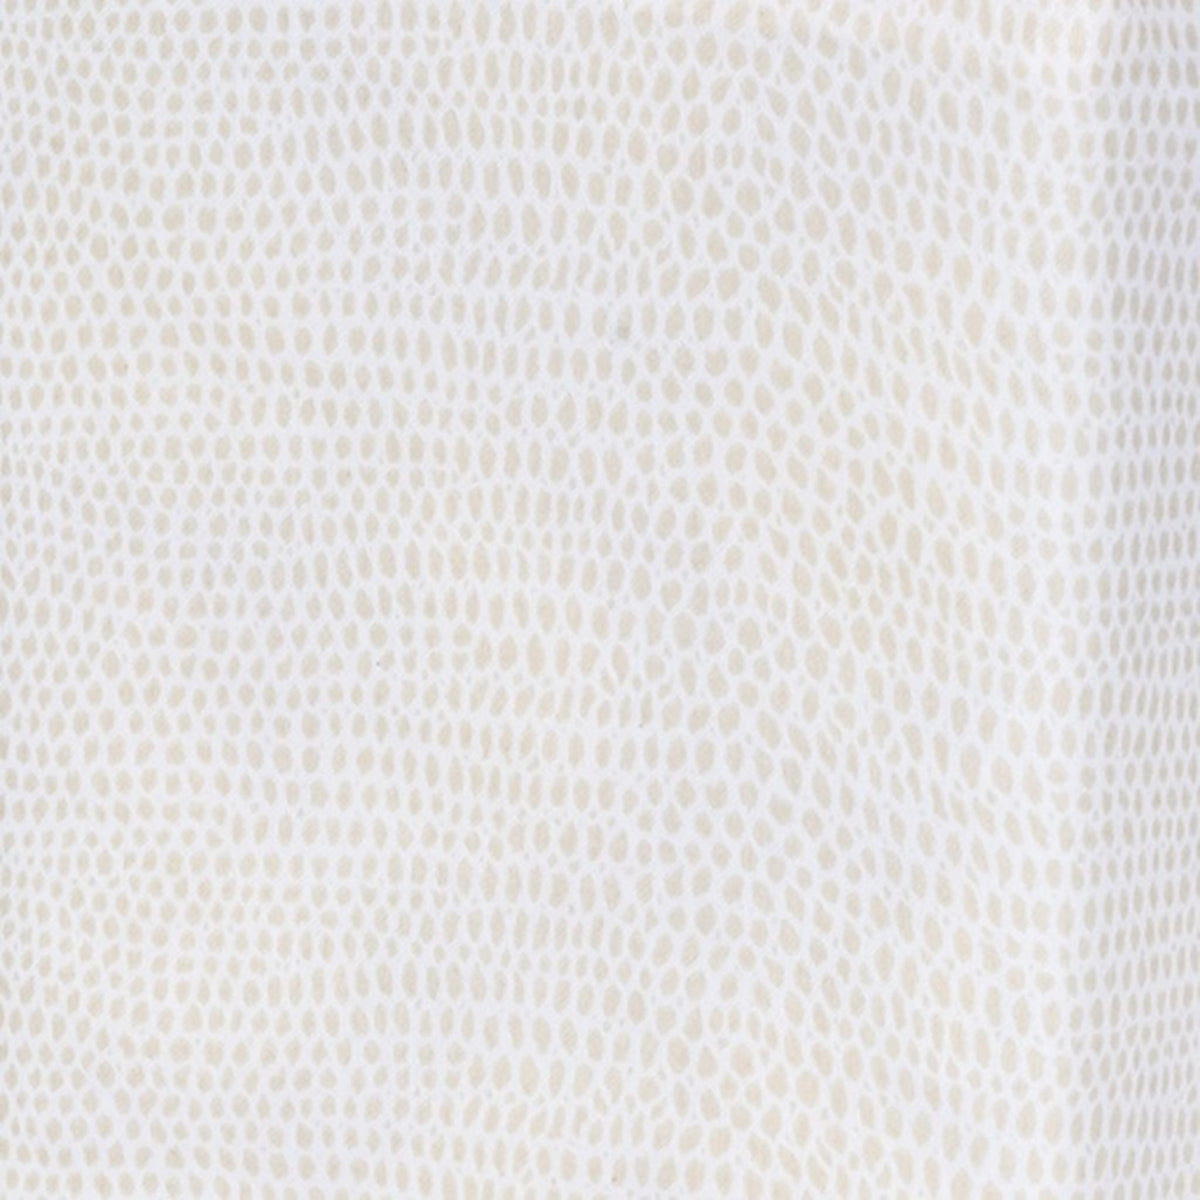 Swatch Sample of Matouk Jasper Tissue Box Cover in Dune Color